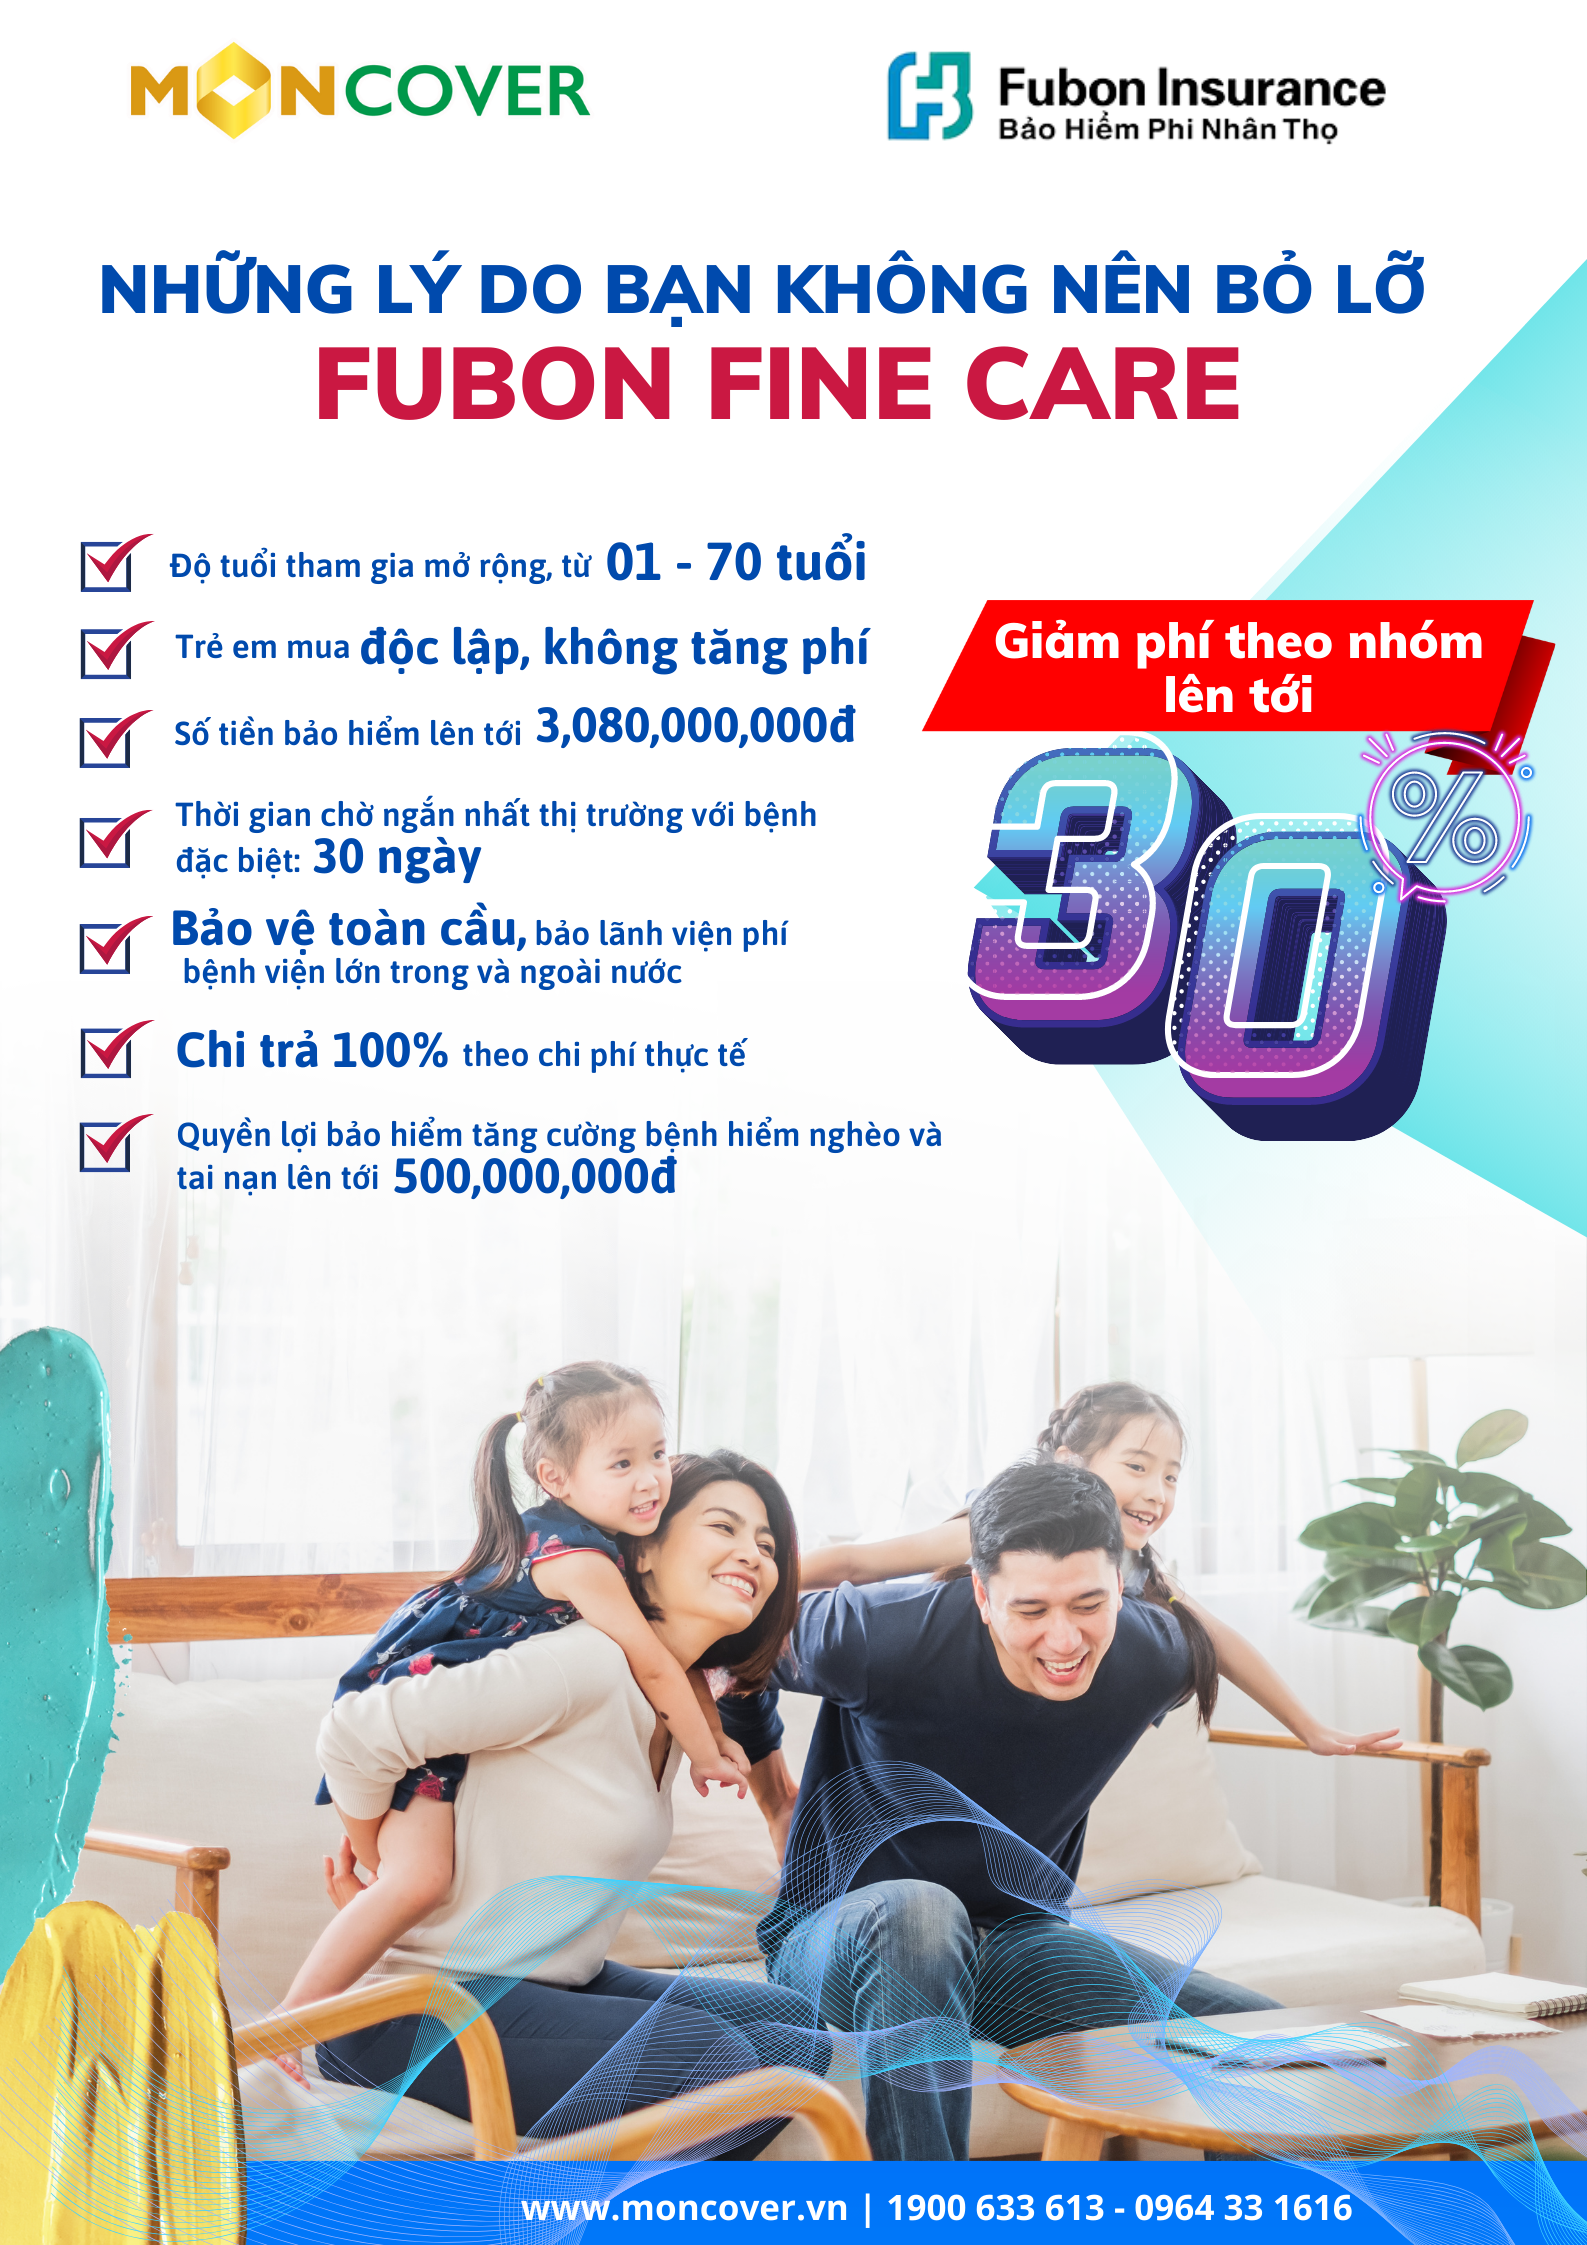 Bảo hiểm sức khỏe Fubon Fine Care